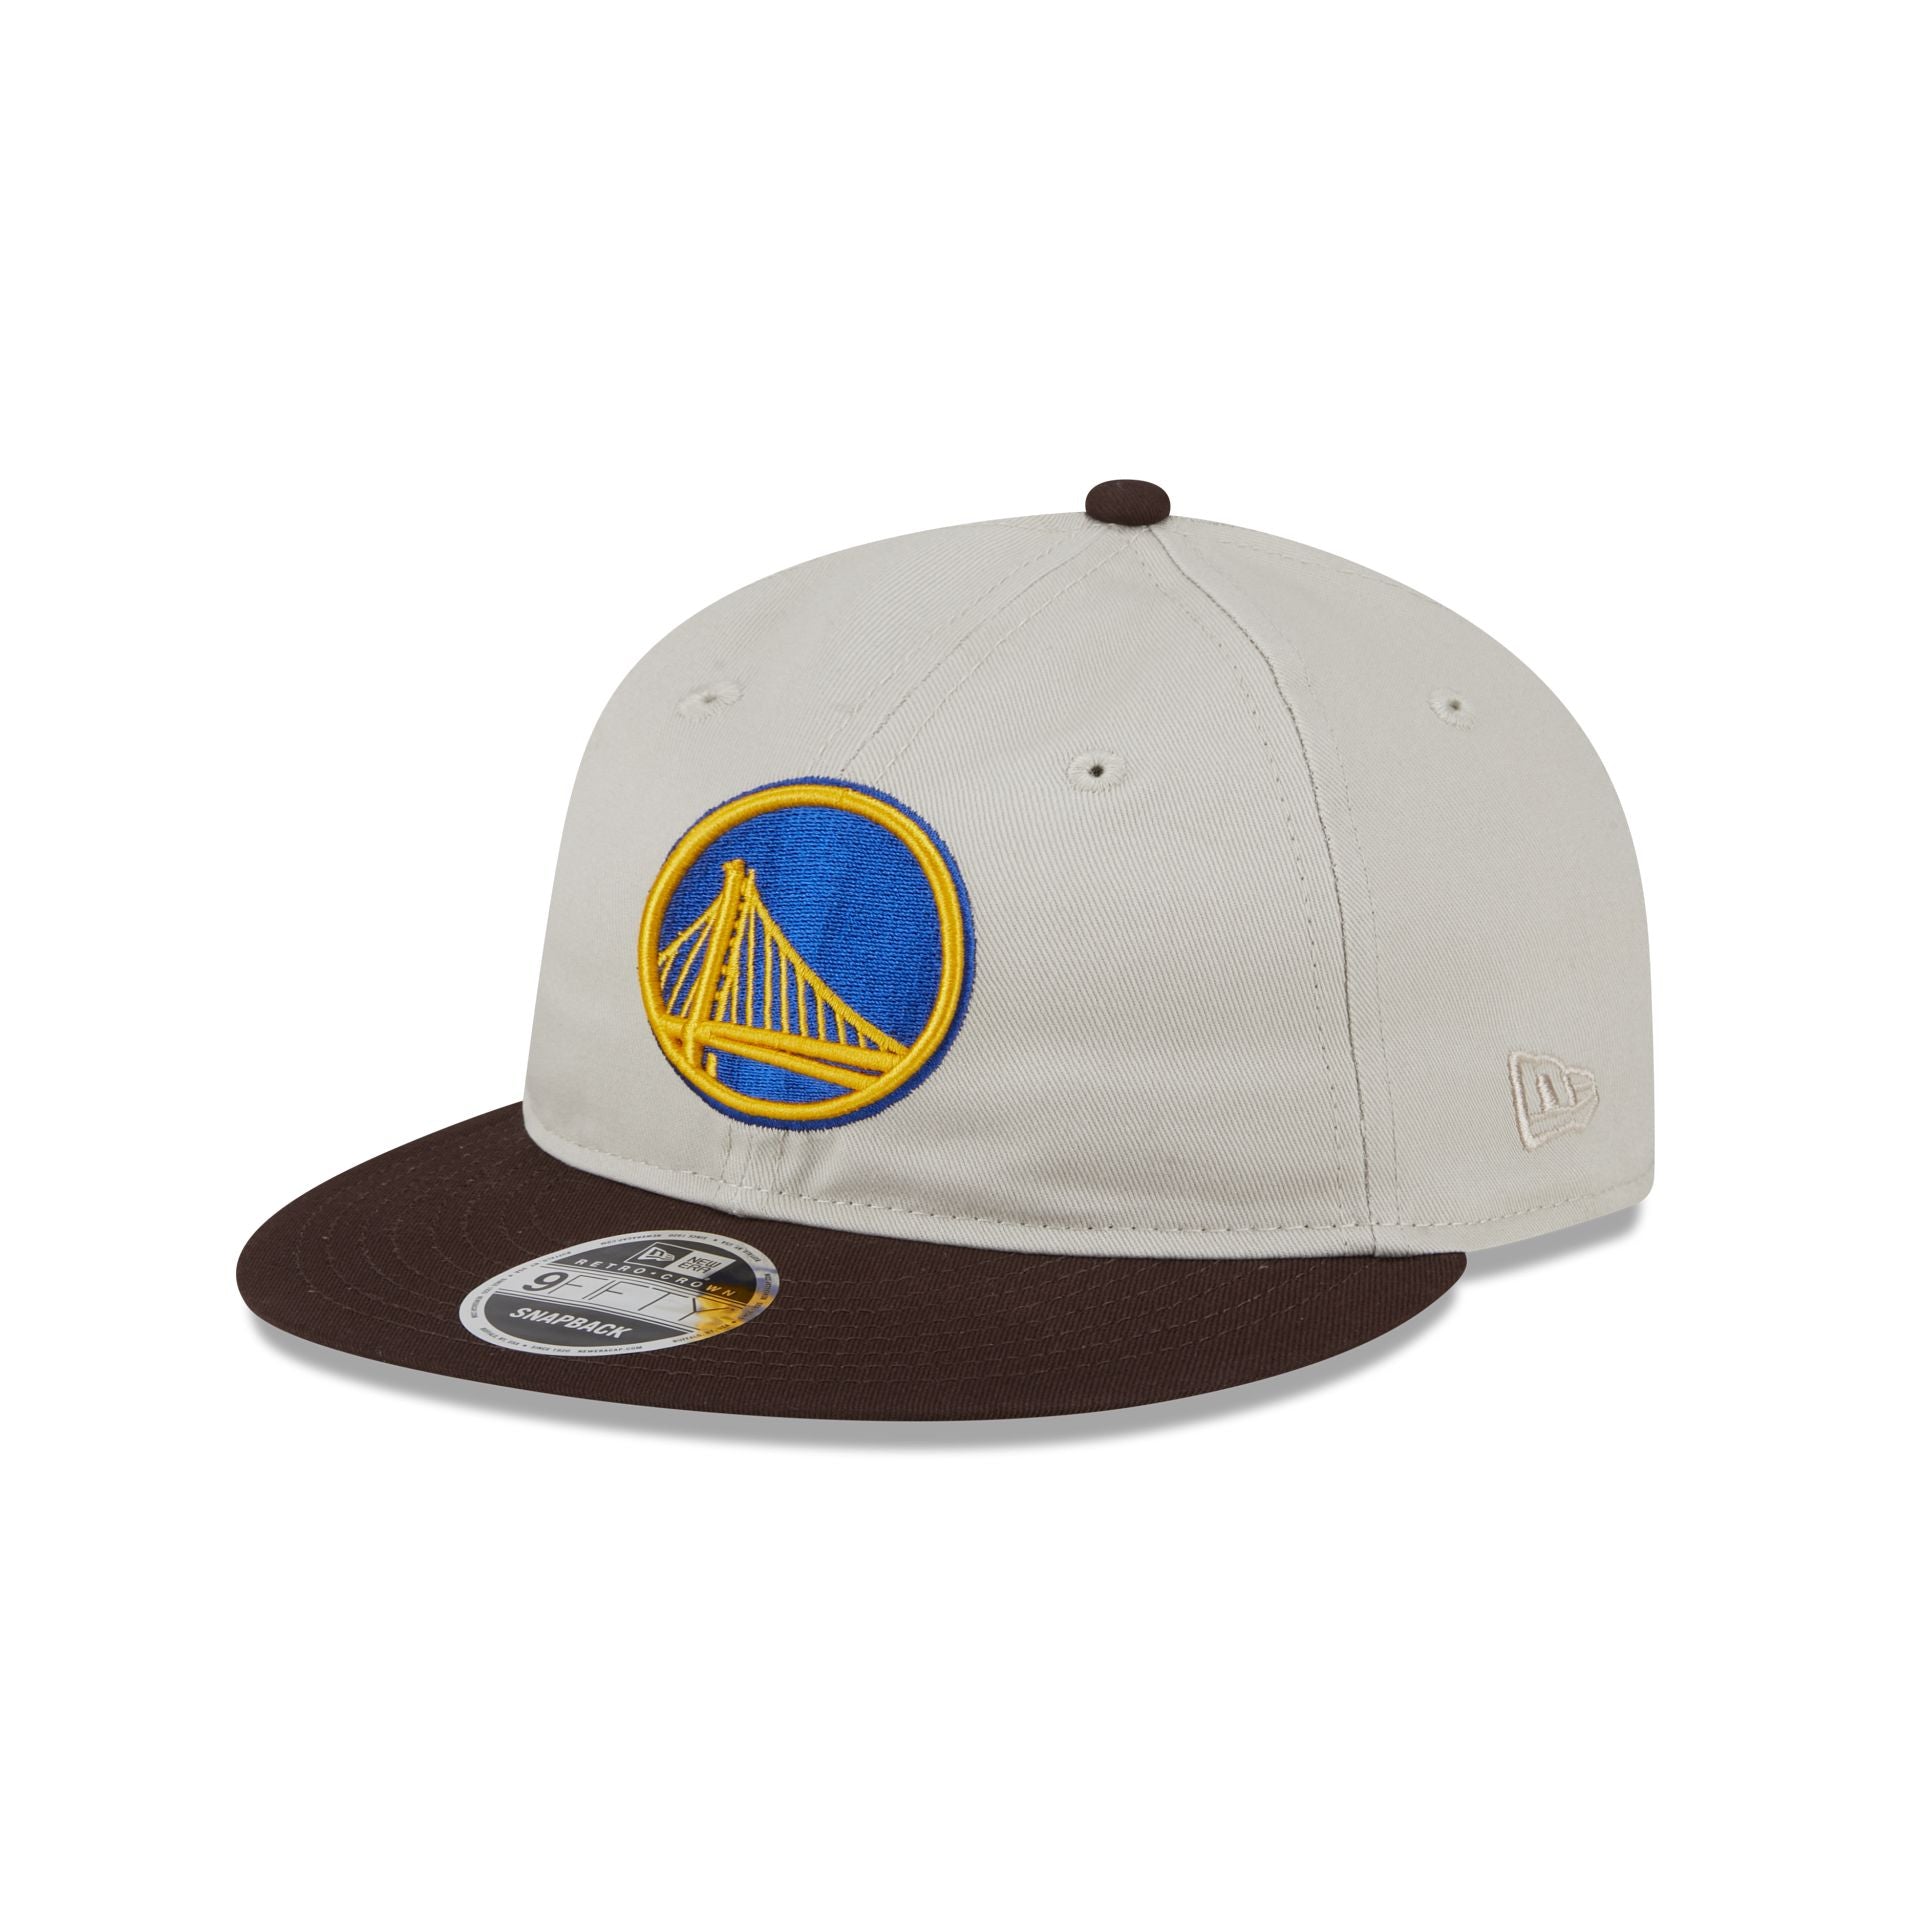 Golden State Warriors Hats